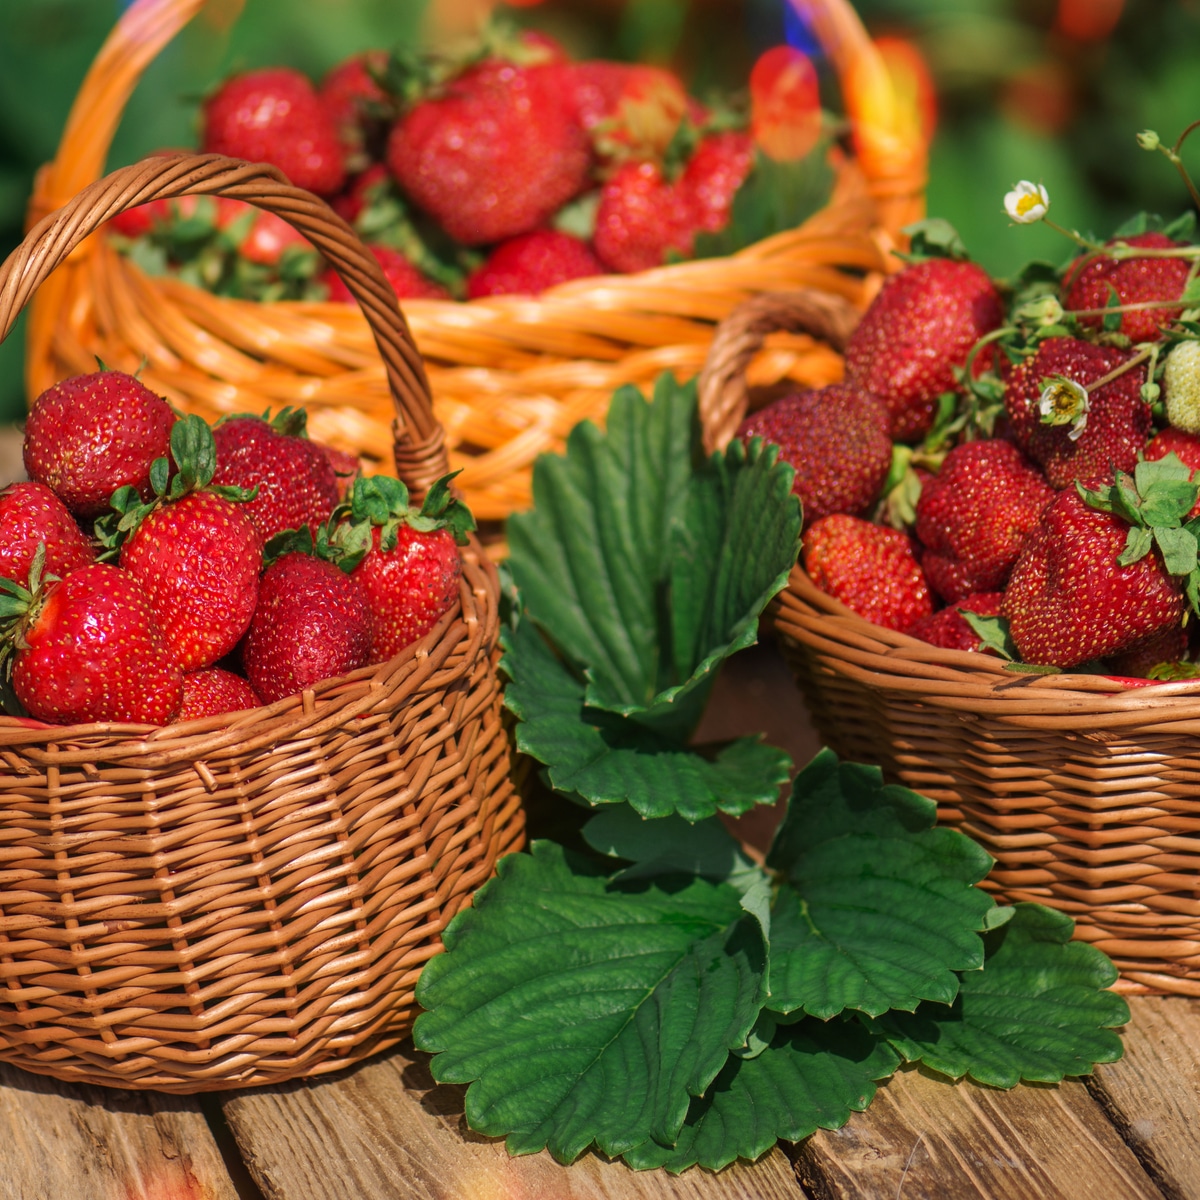 Three baskets full of ripe fresh strawberries